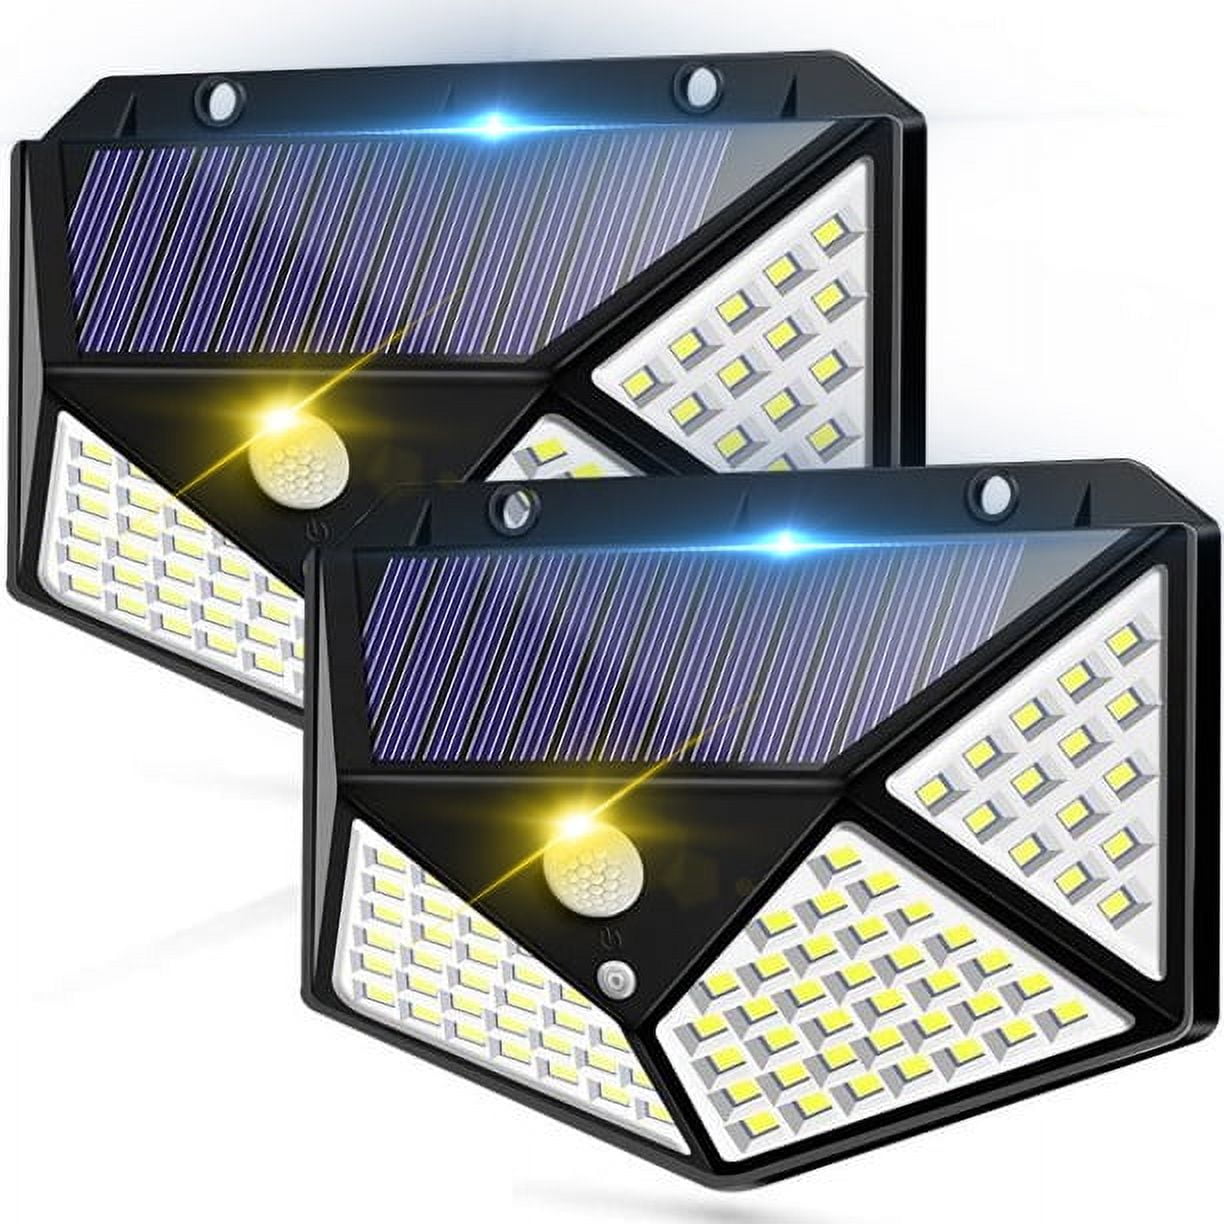 2-Pack Solar Motion Sensor Lights w/100 LEDs IP65 Waterproof Wall Light $7.10 + Free S&H w/ Walmart+ or $35+